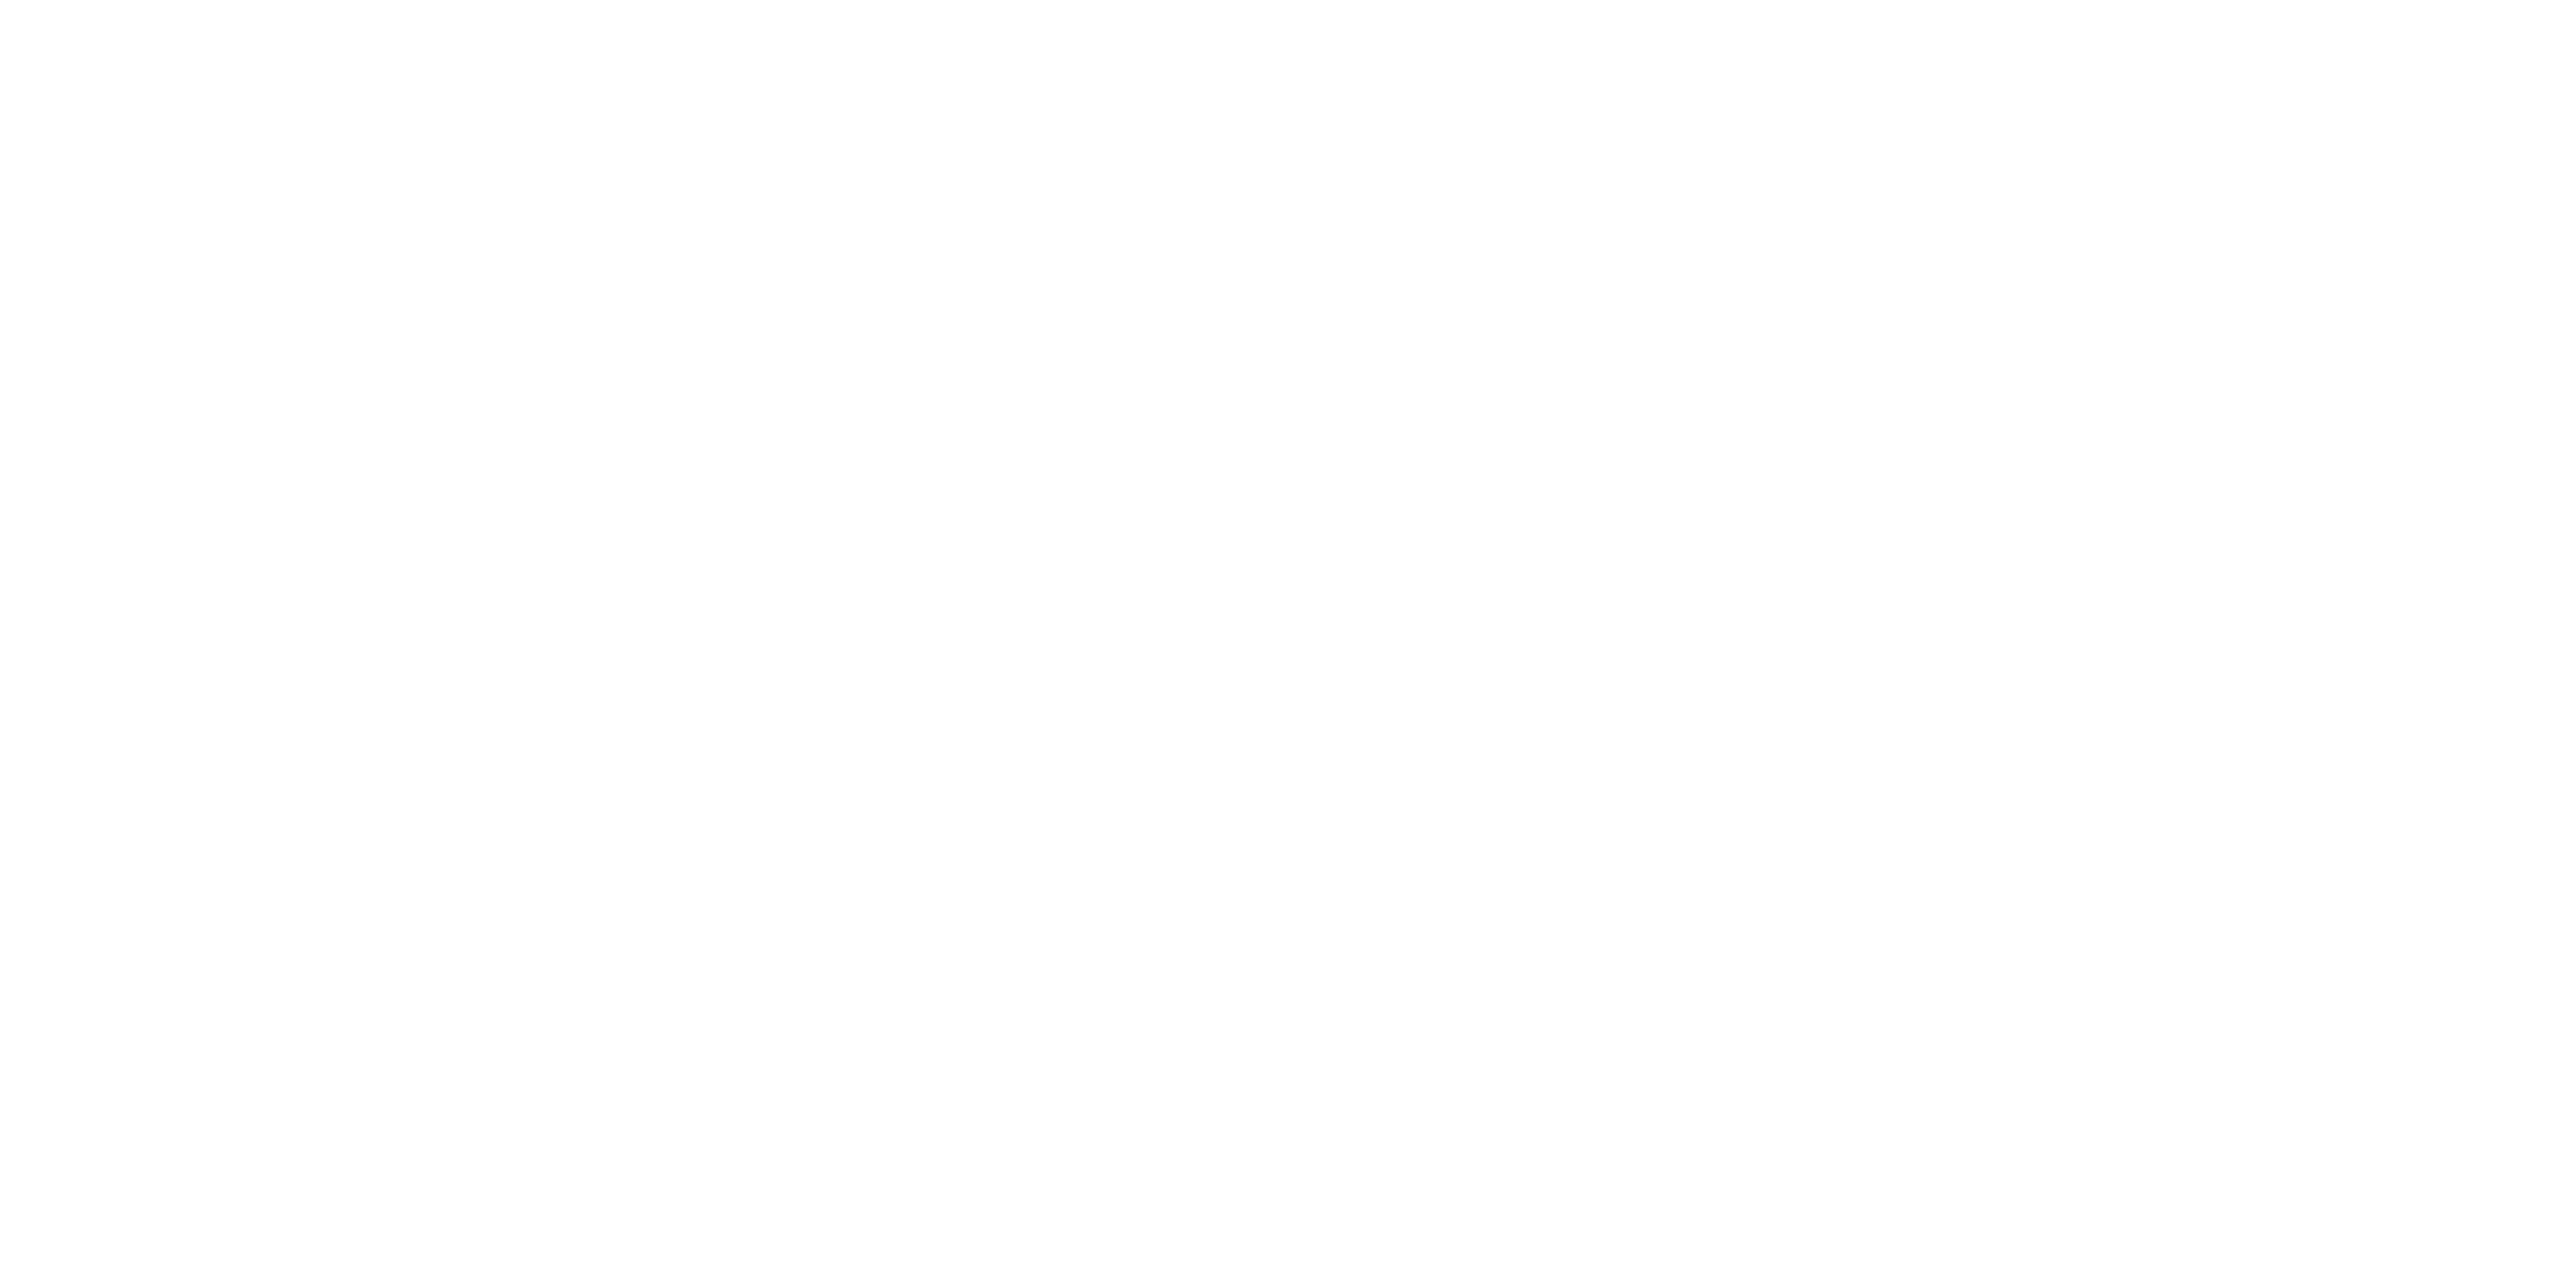 True botanicals white logo